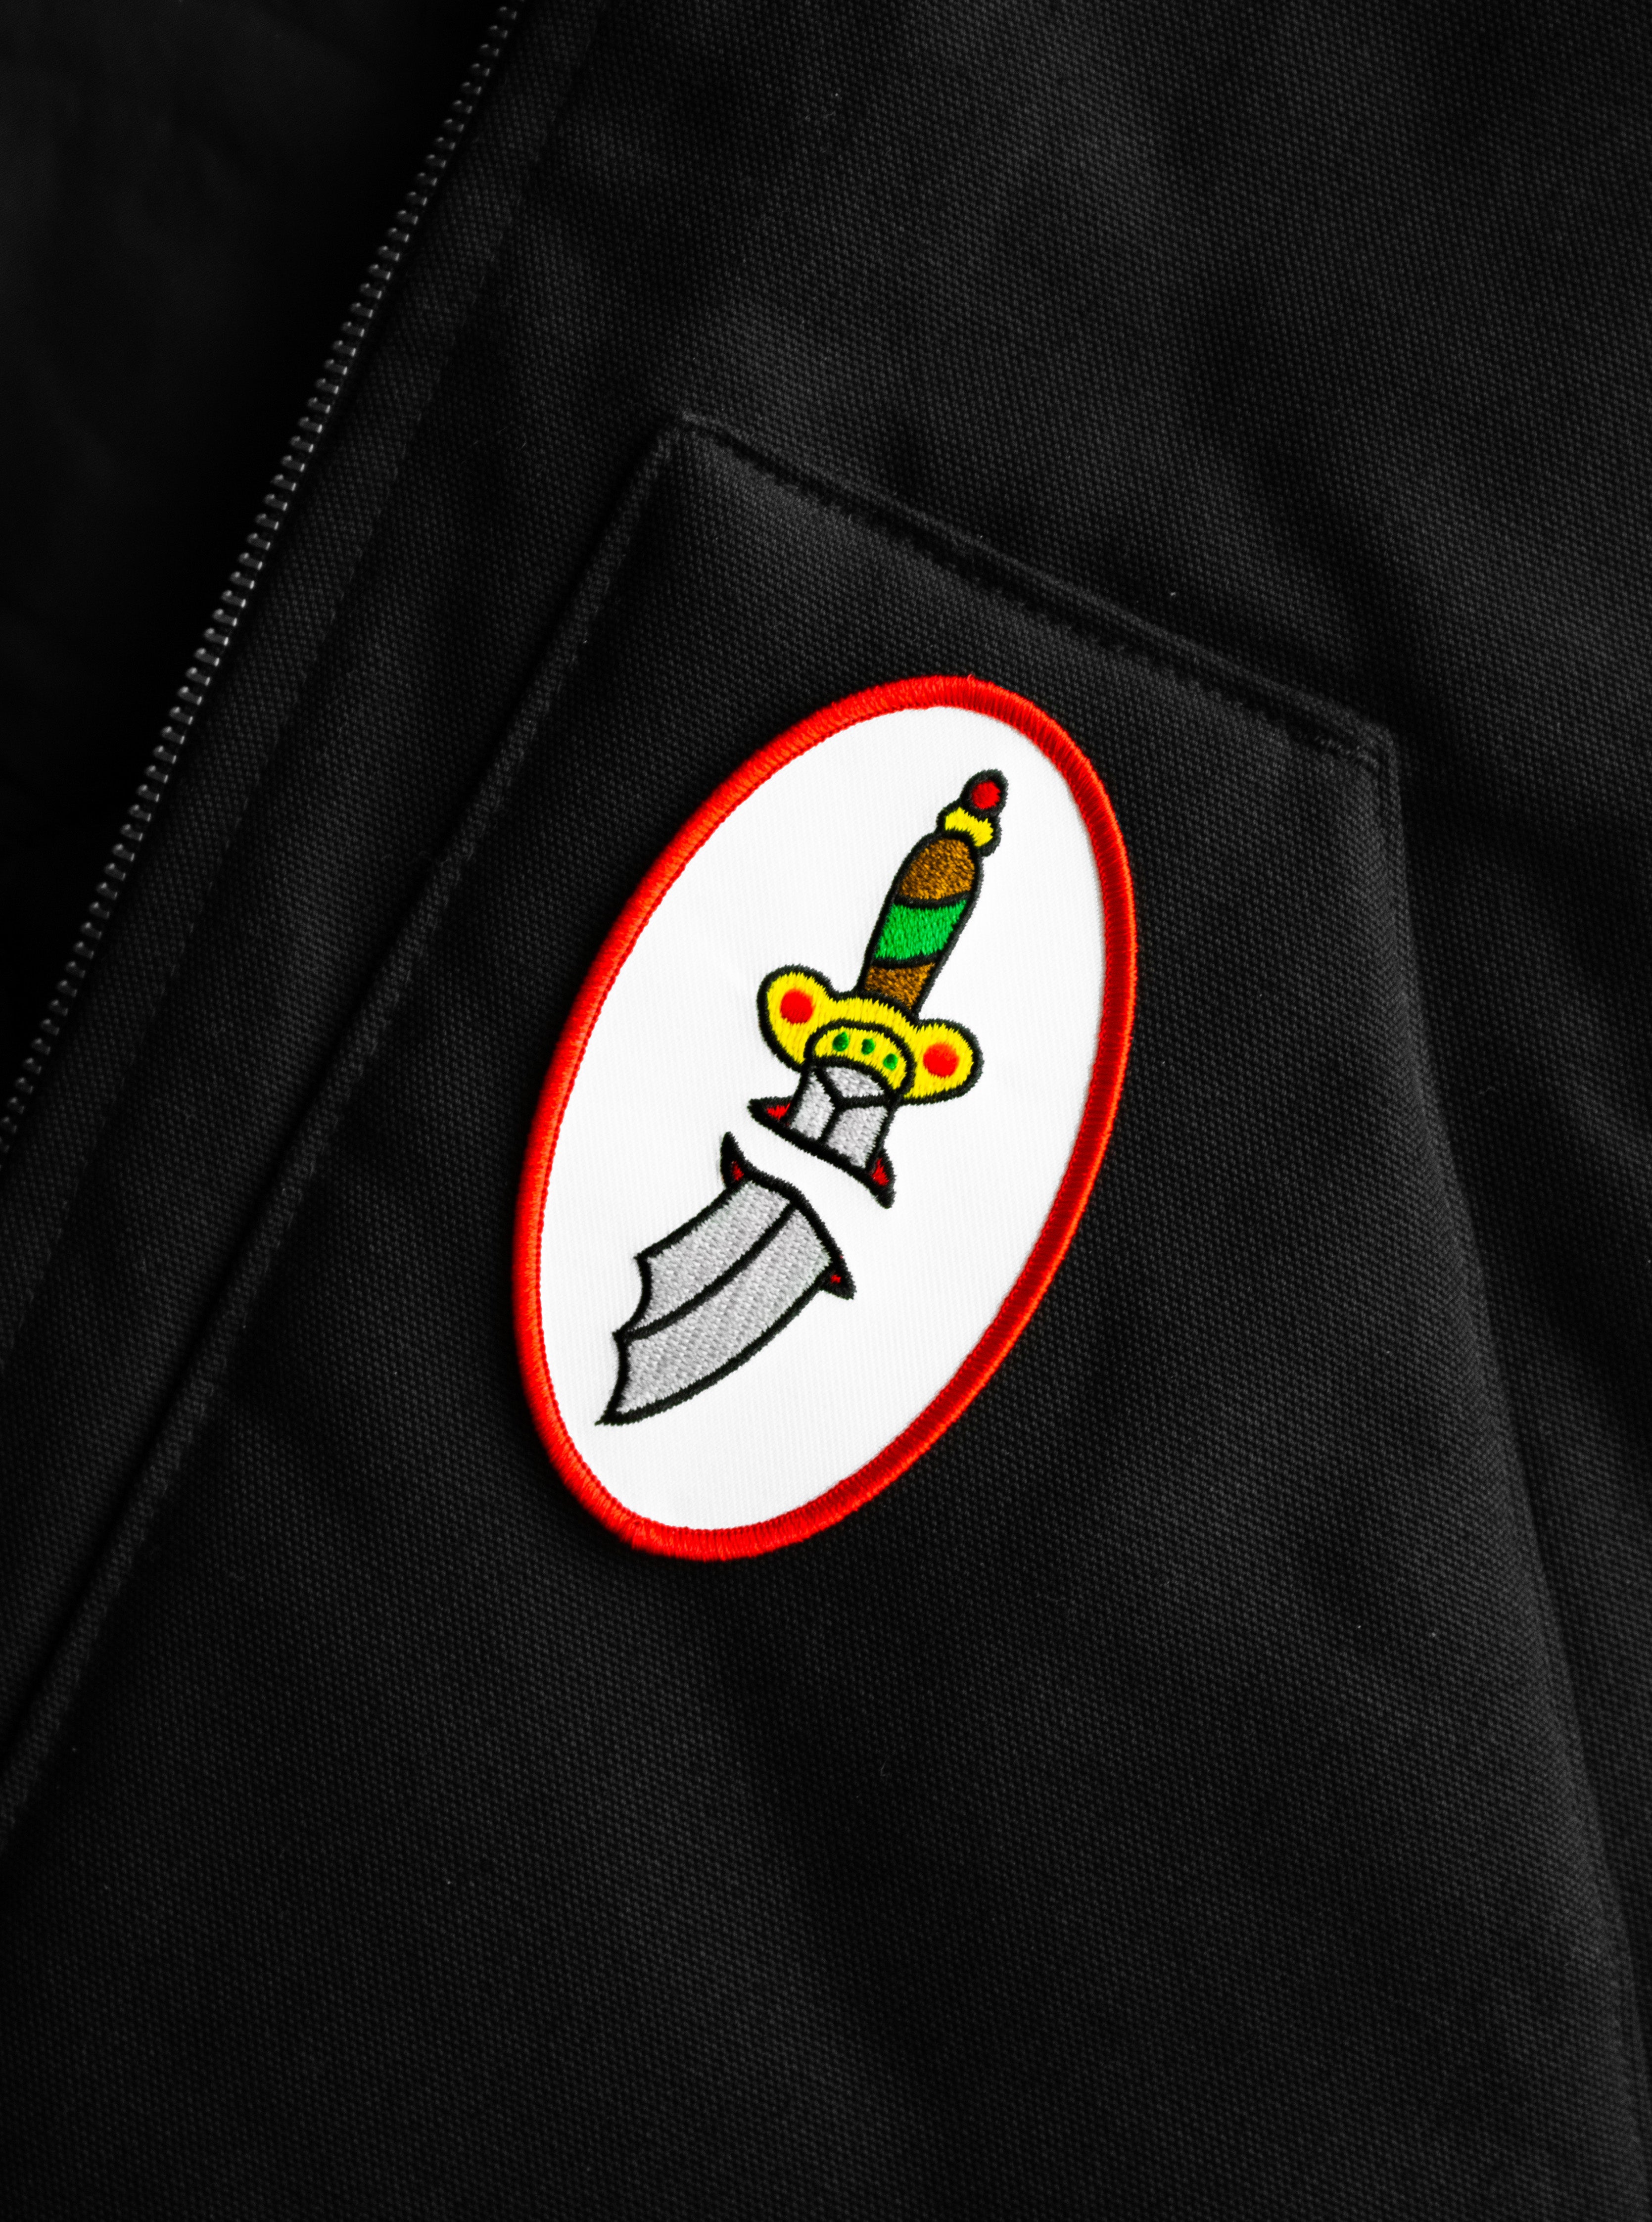 The "Sword" Patch on a black canvas vest.